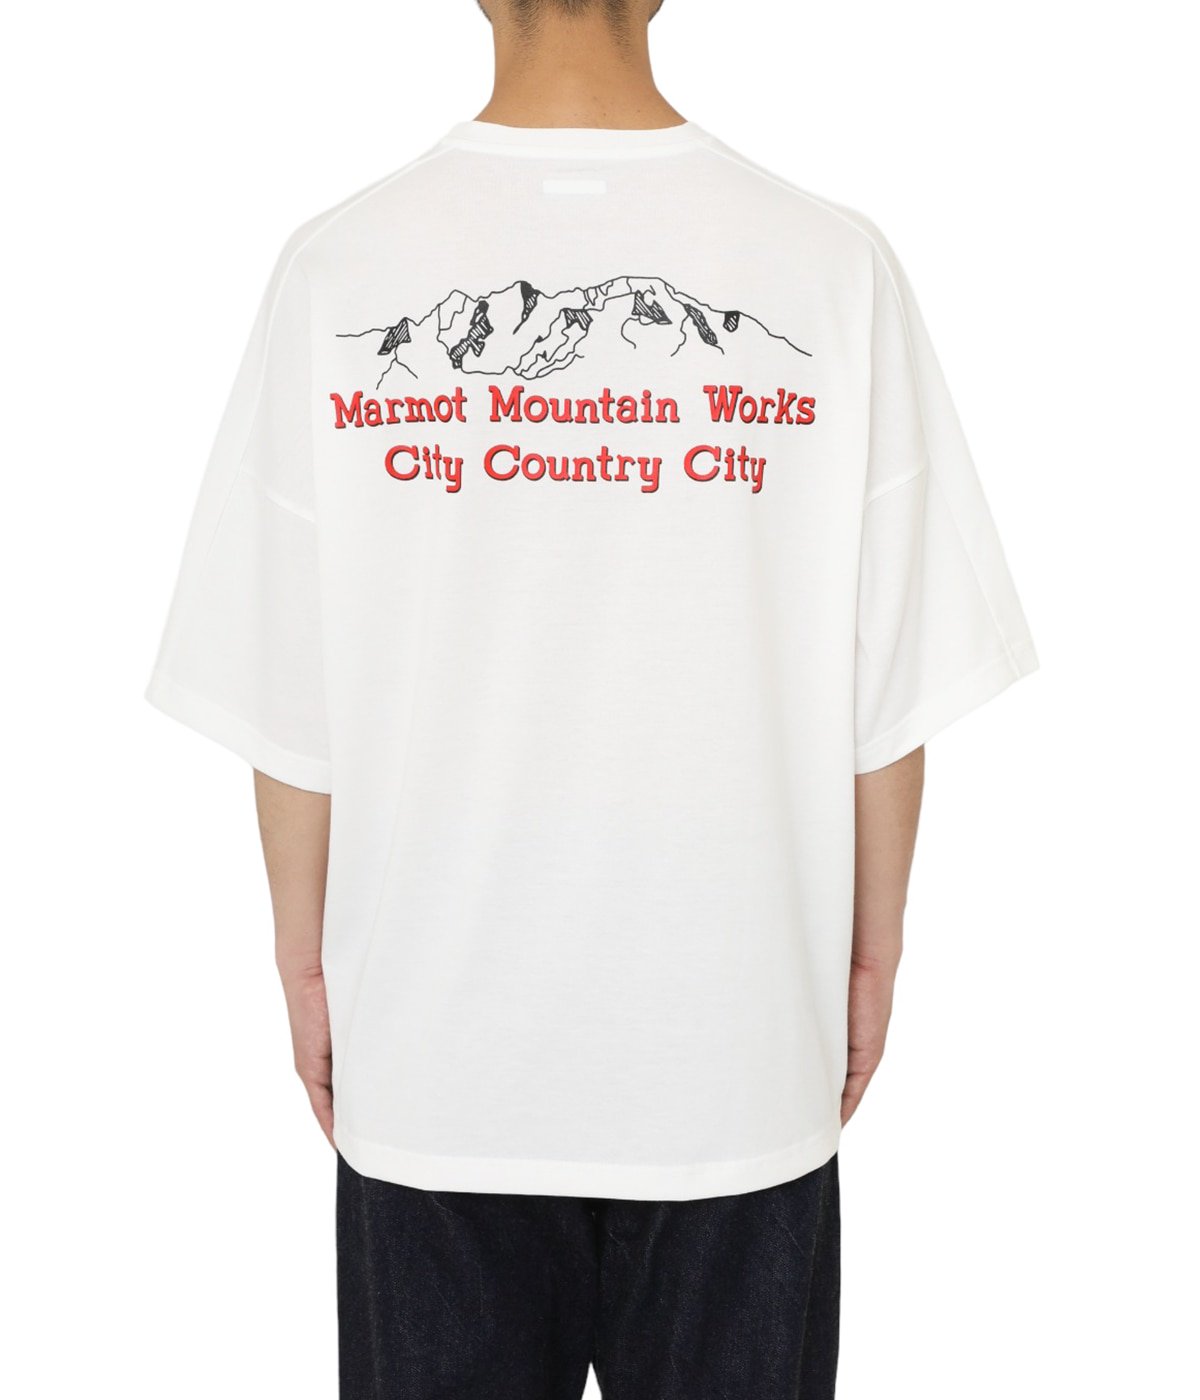 CITY COUNTRY CITY x Marmot ビッグサイズドライTシャツ